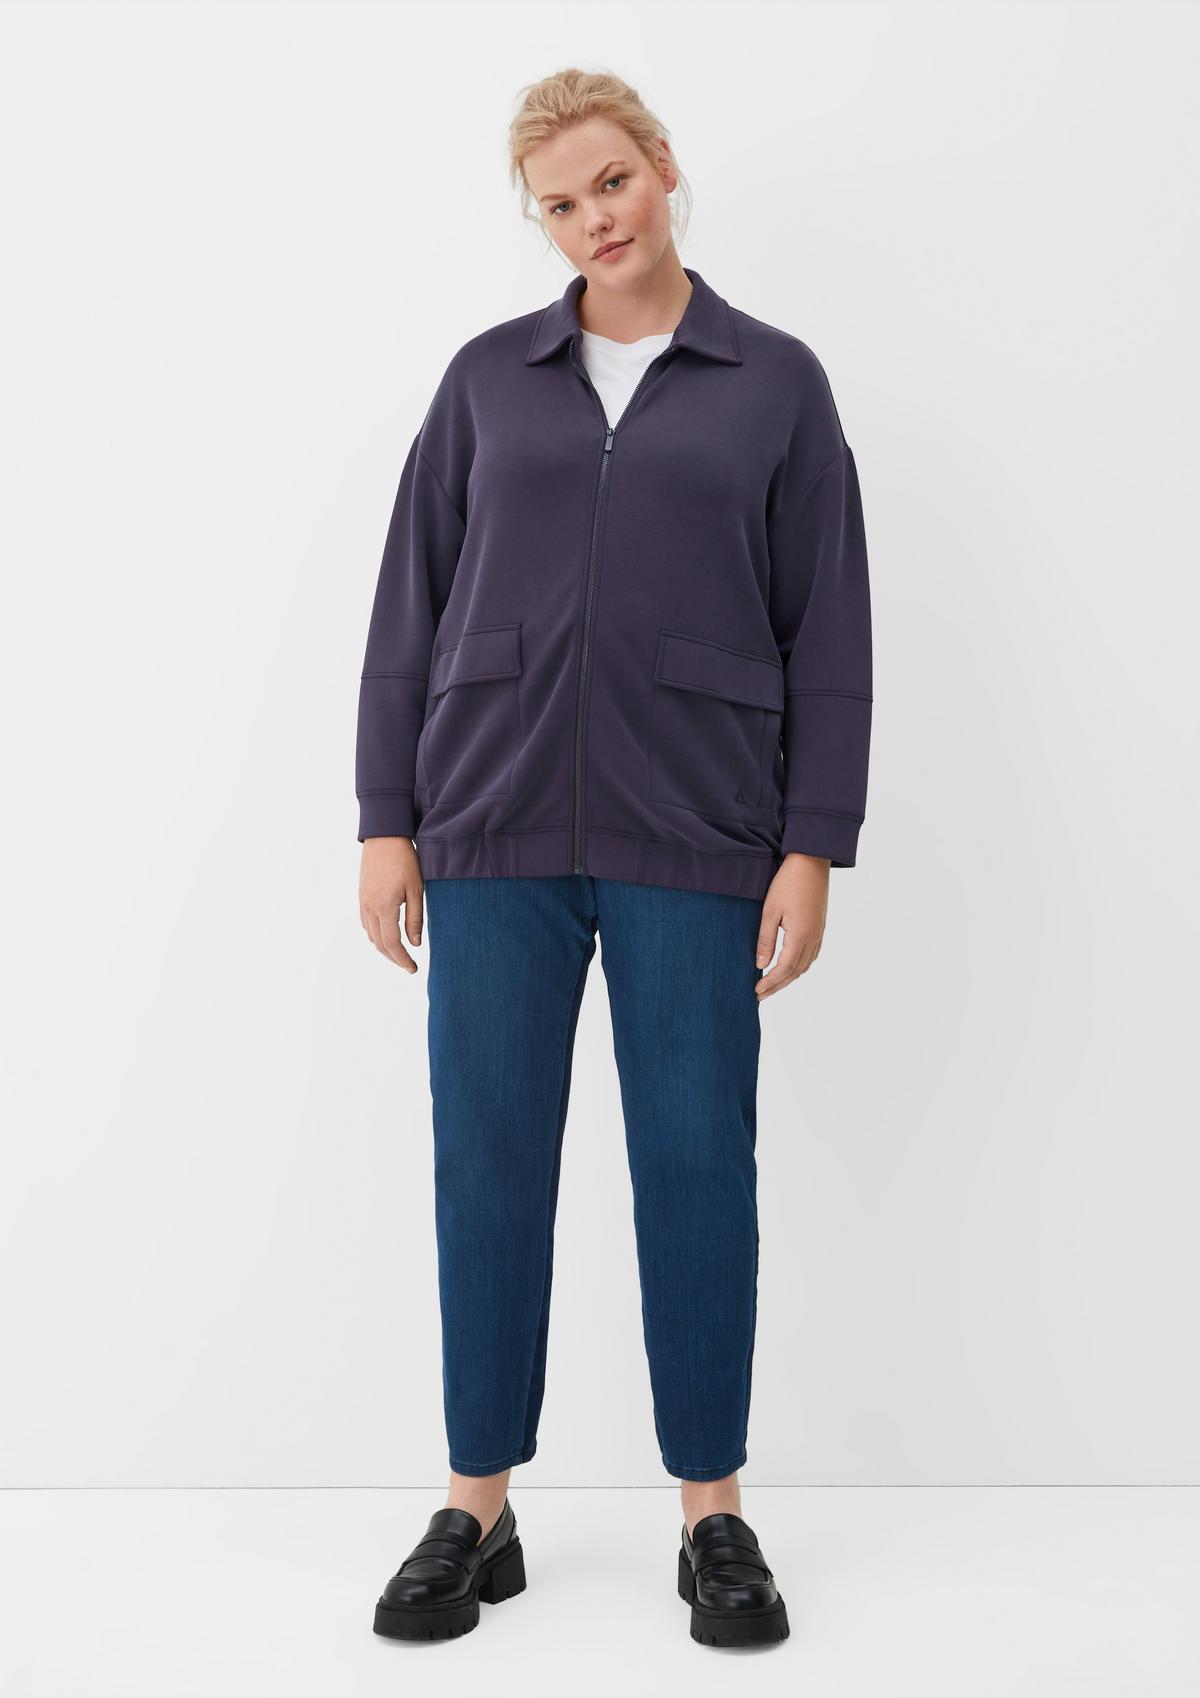 s.Oliver Sweatshirt jacket with flap pockets